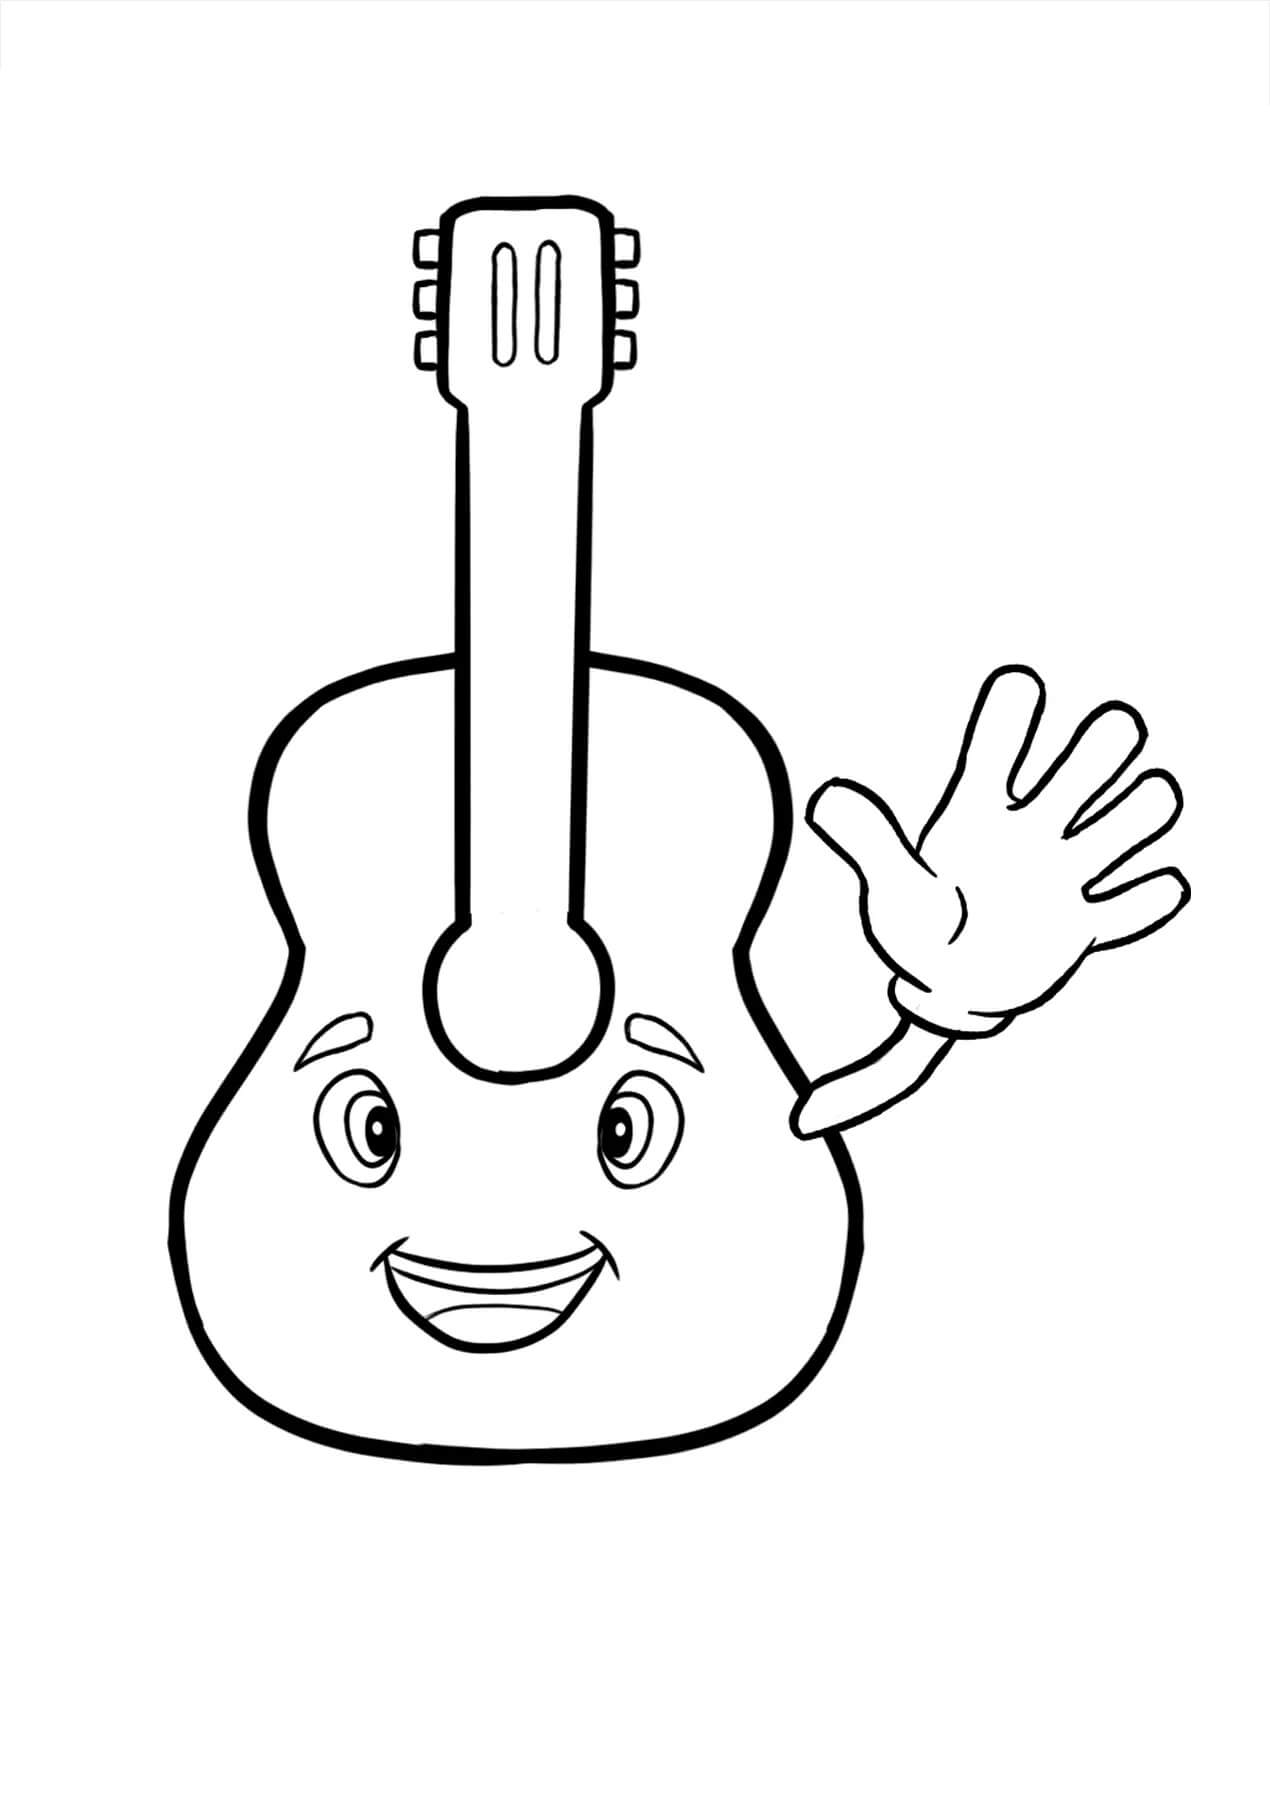 Målarbild Tecknad Gitarr